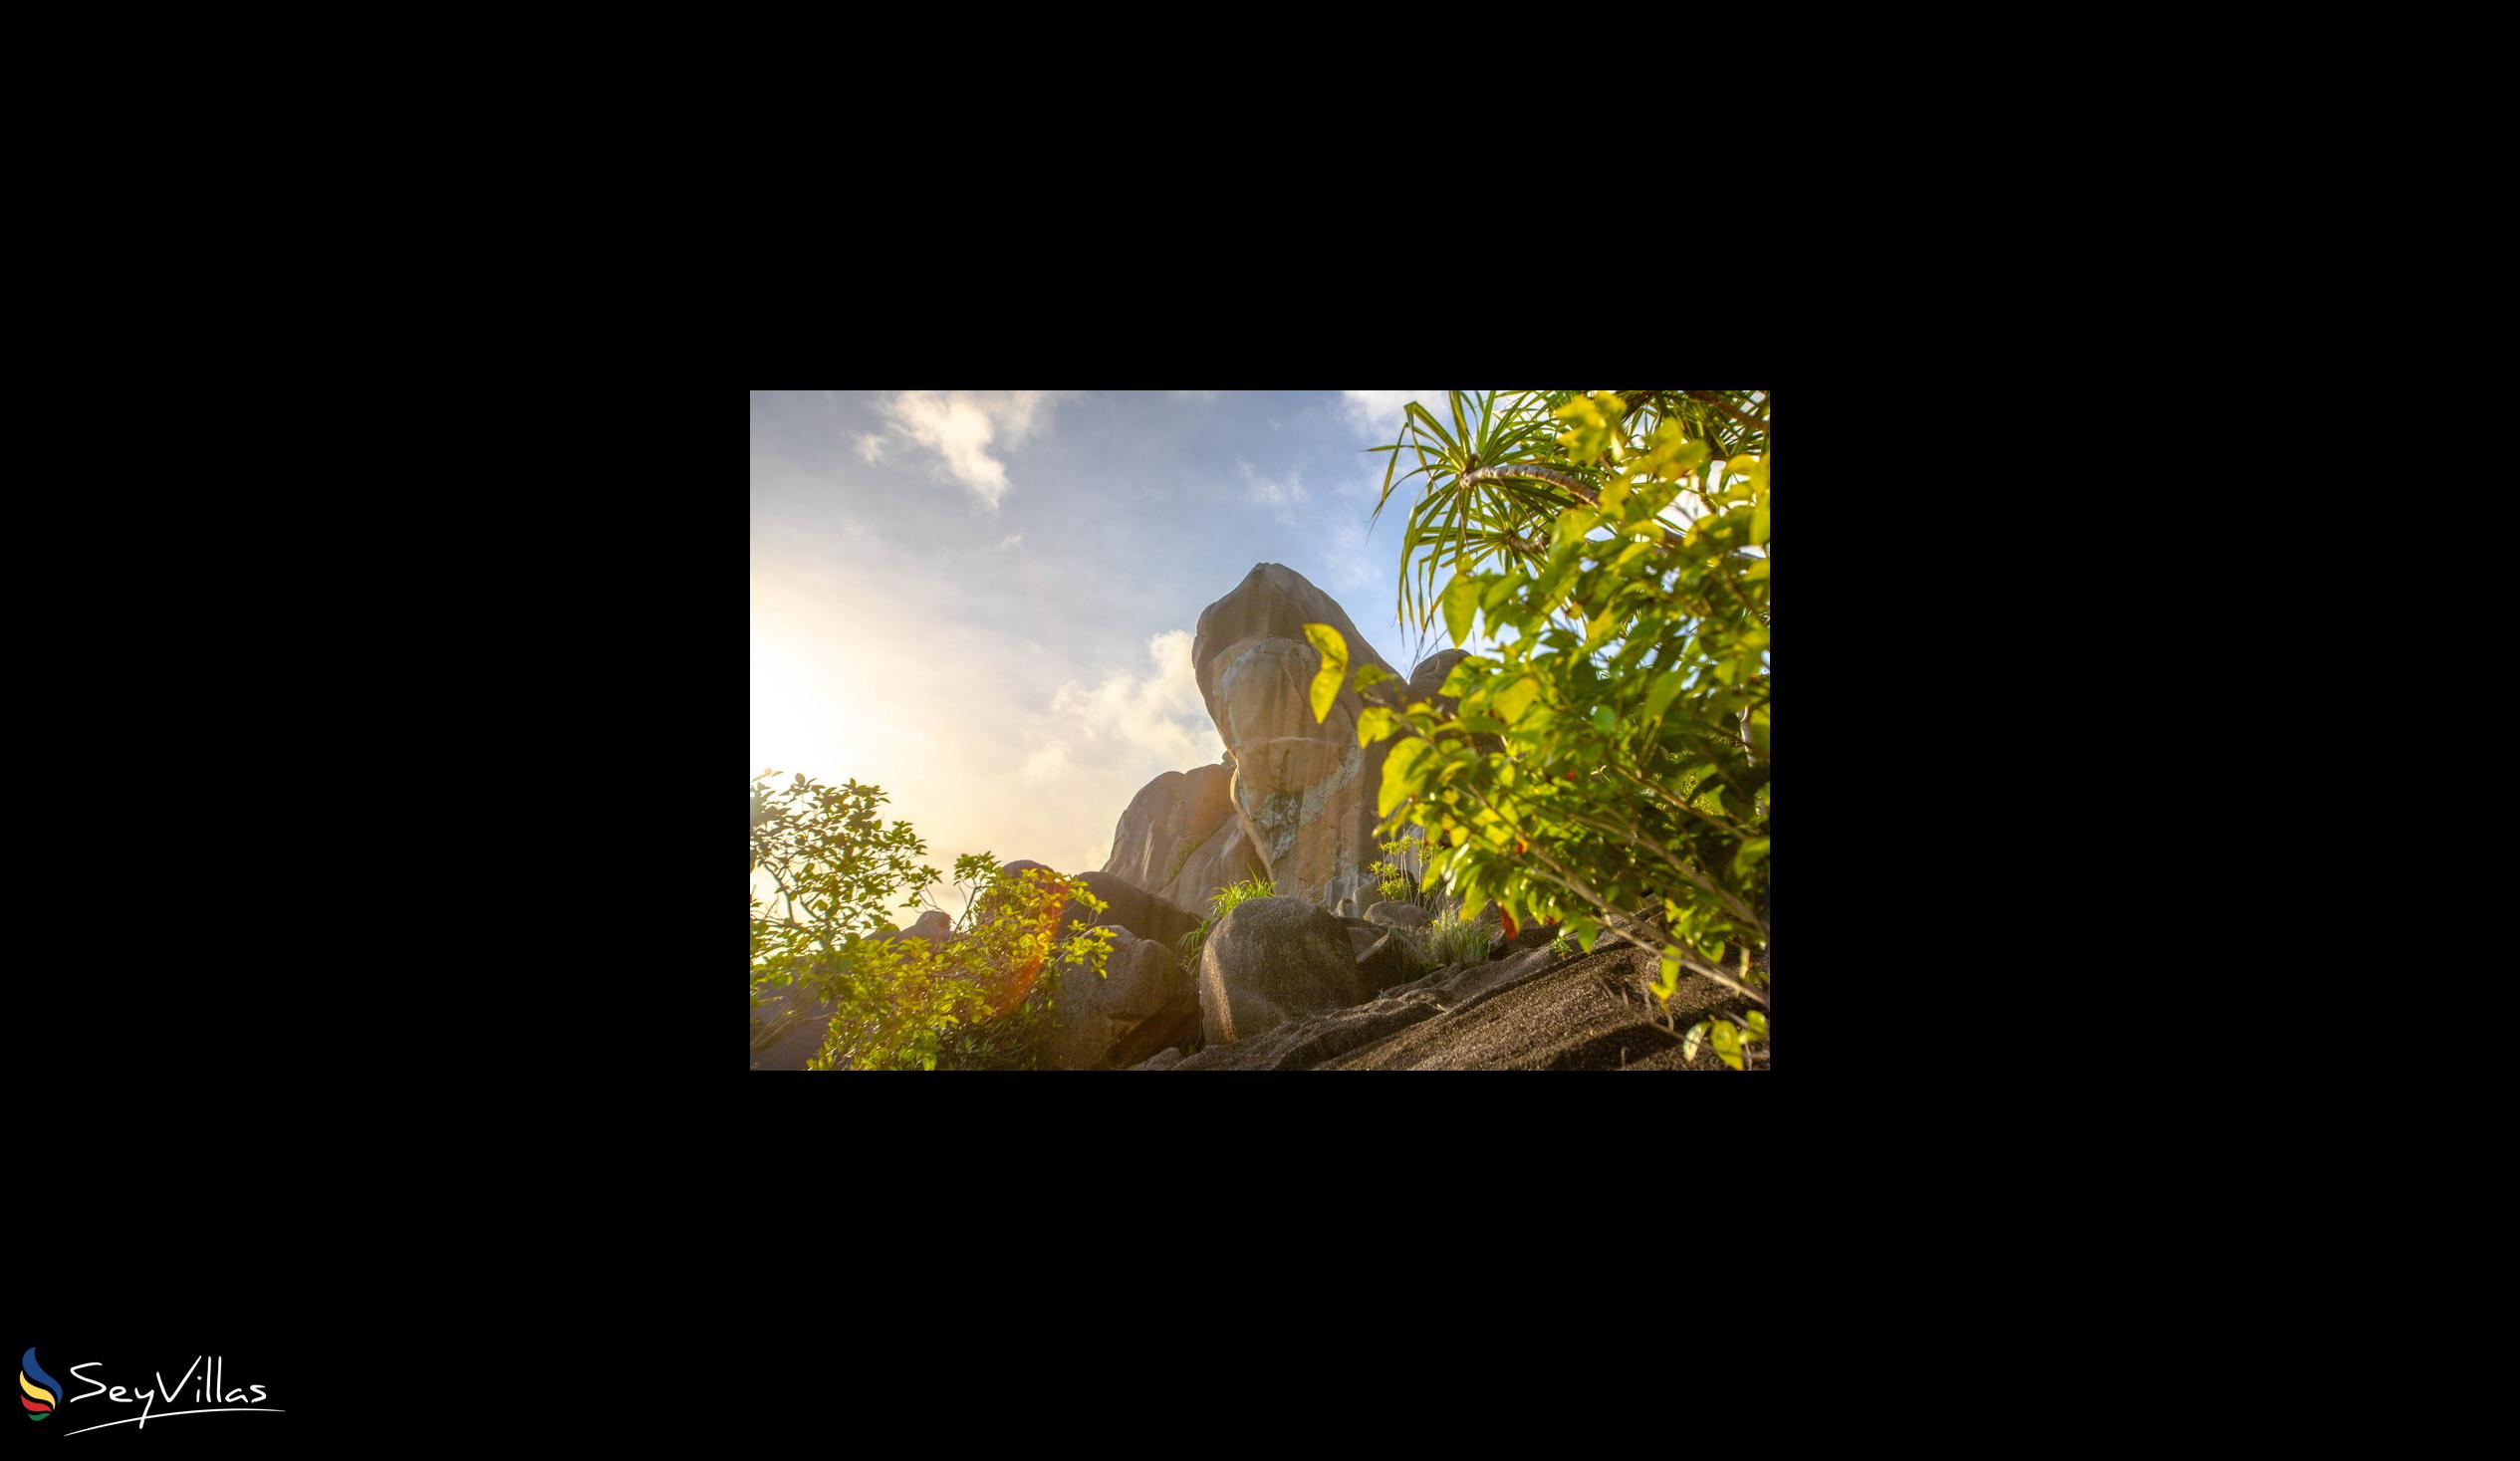 Photo 37: Ambiance Villa - Location - La Digue (Seychelles)